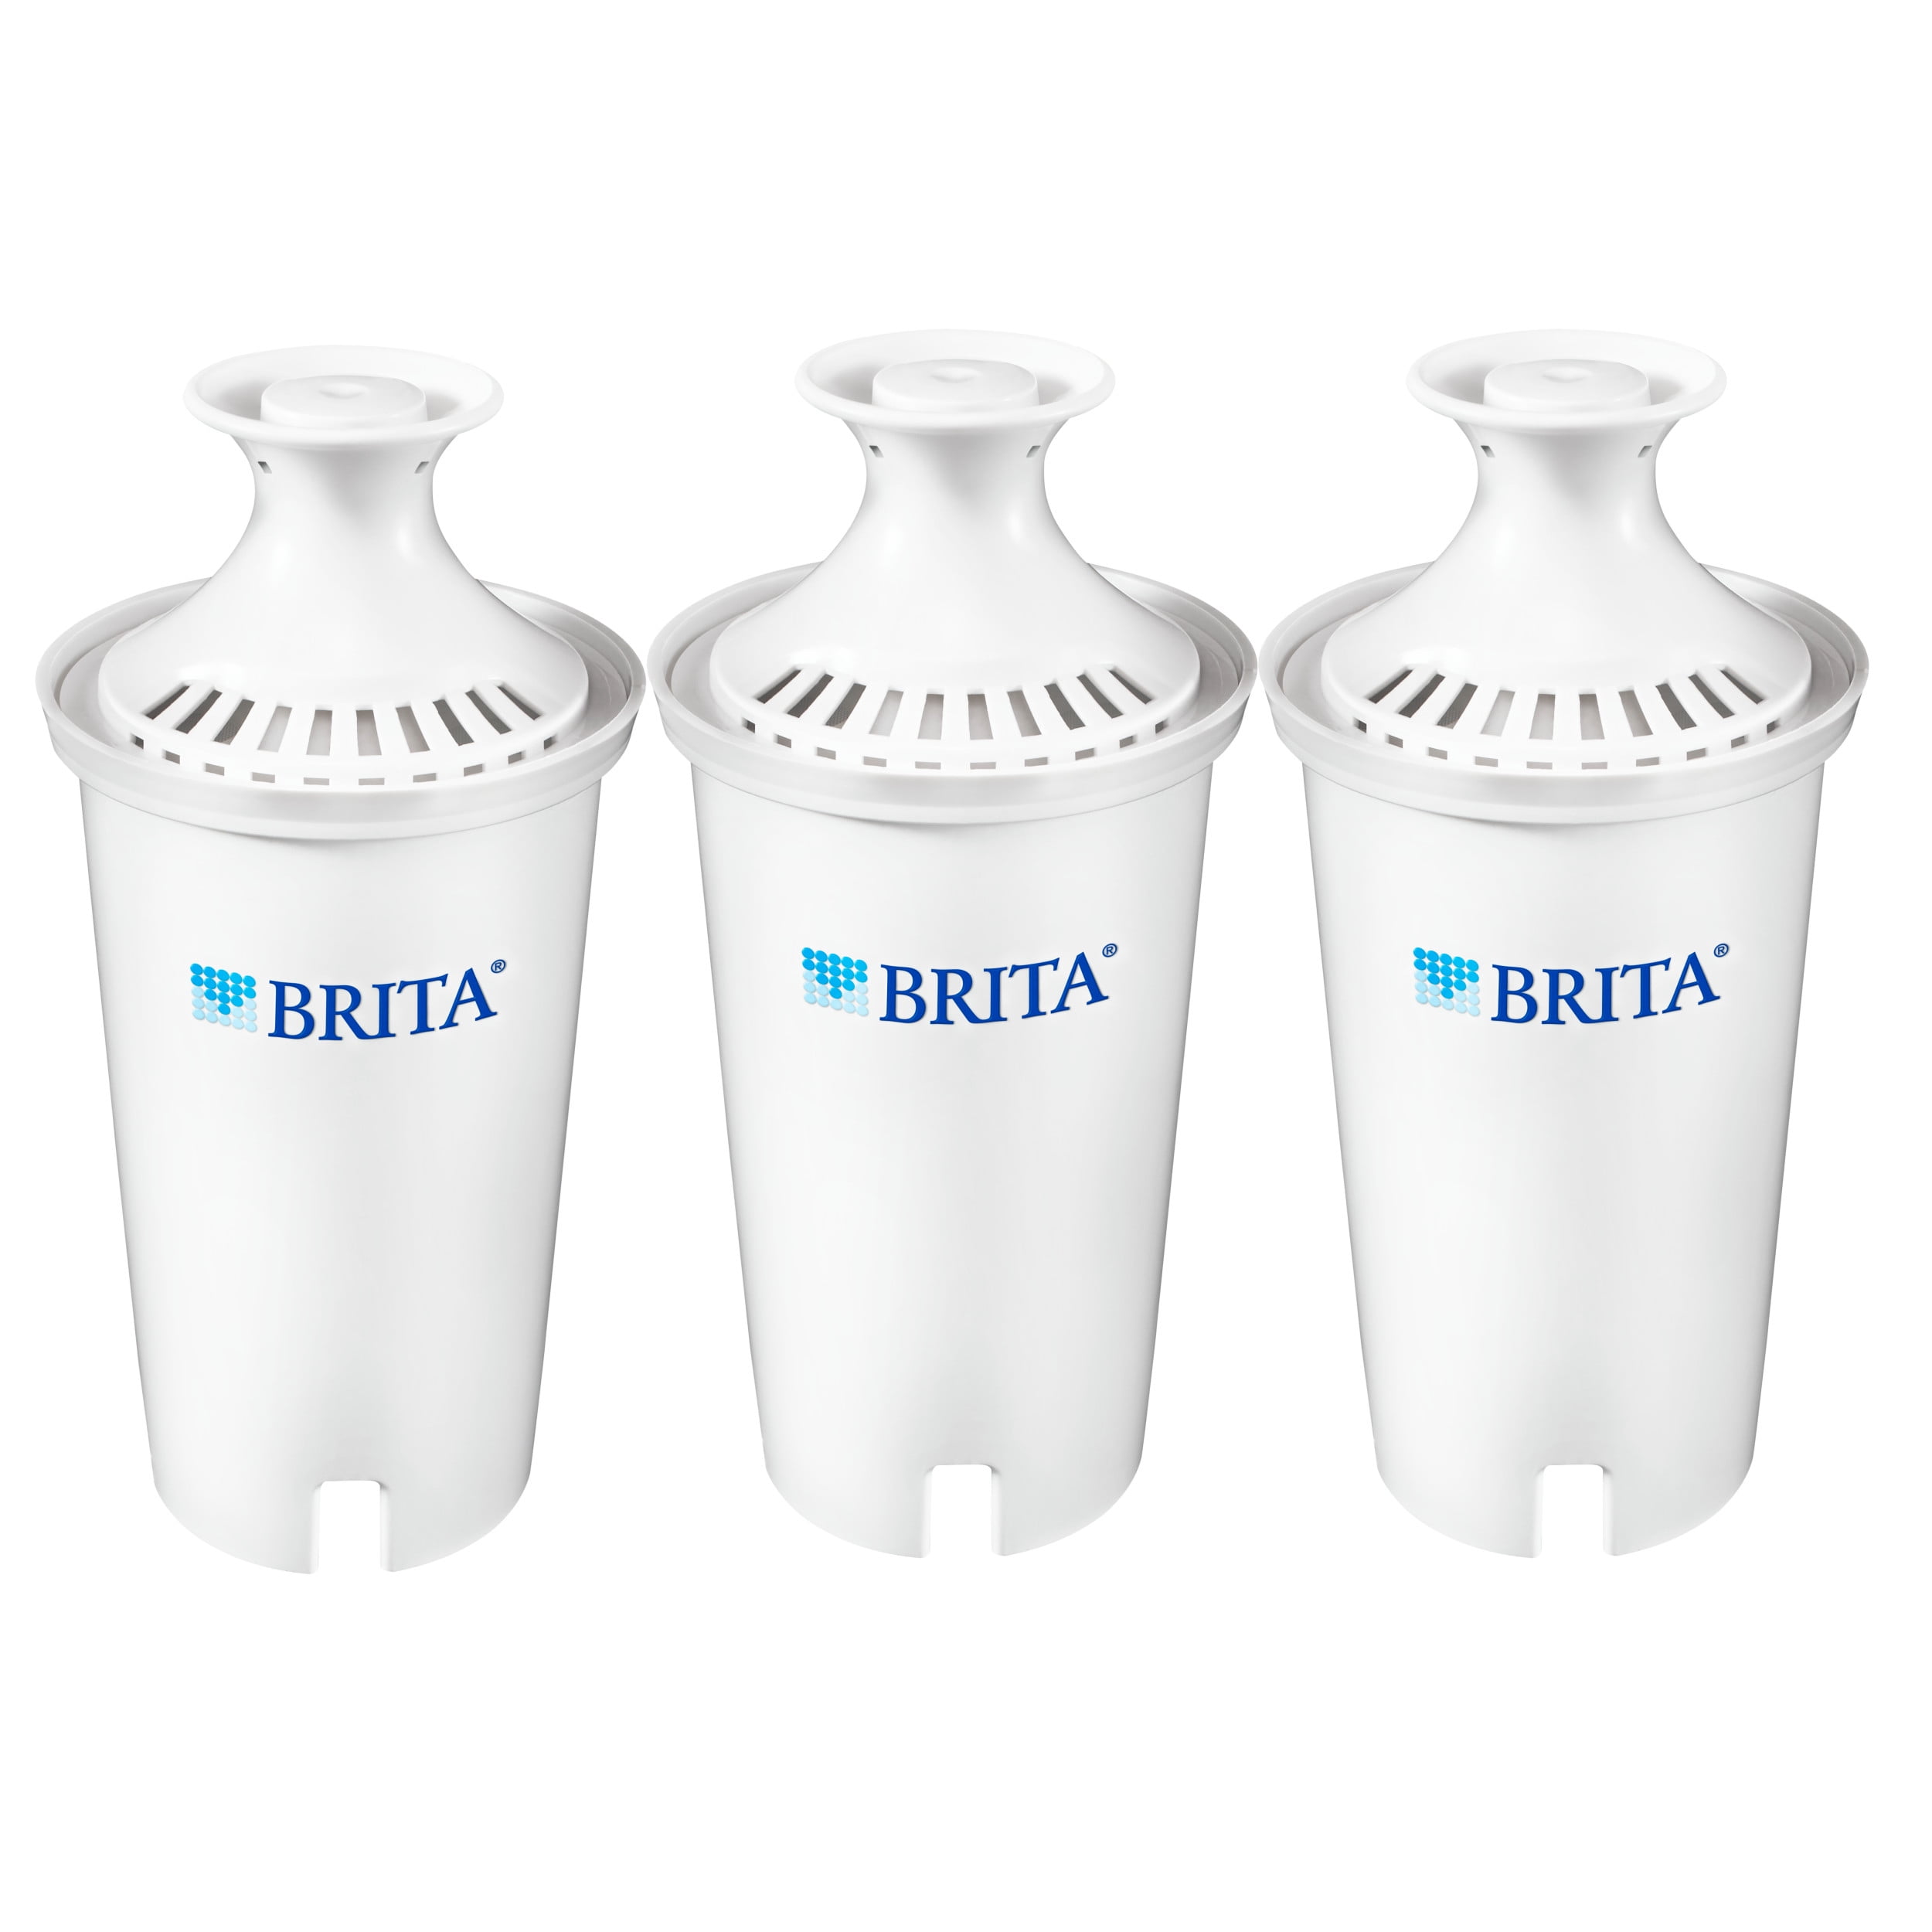 Brita Standard Filter Replacements, BPA Free, Reduces Chlorine, and Mercury, 3 Pack Walmart.com